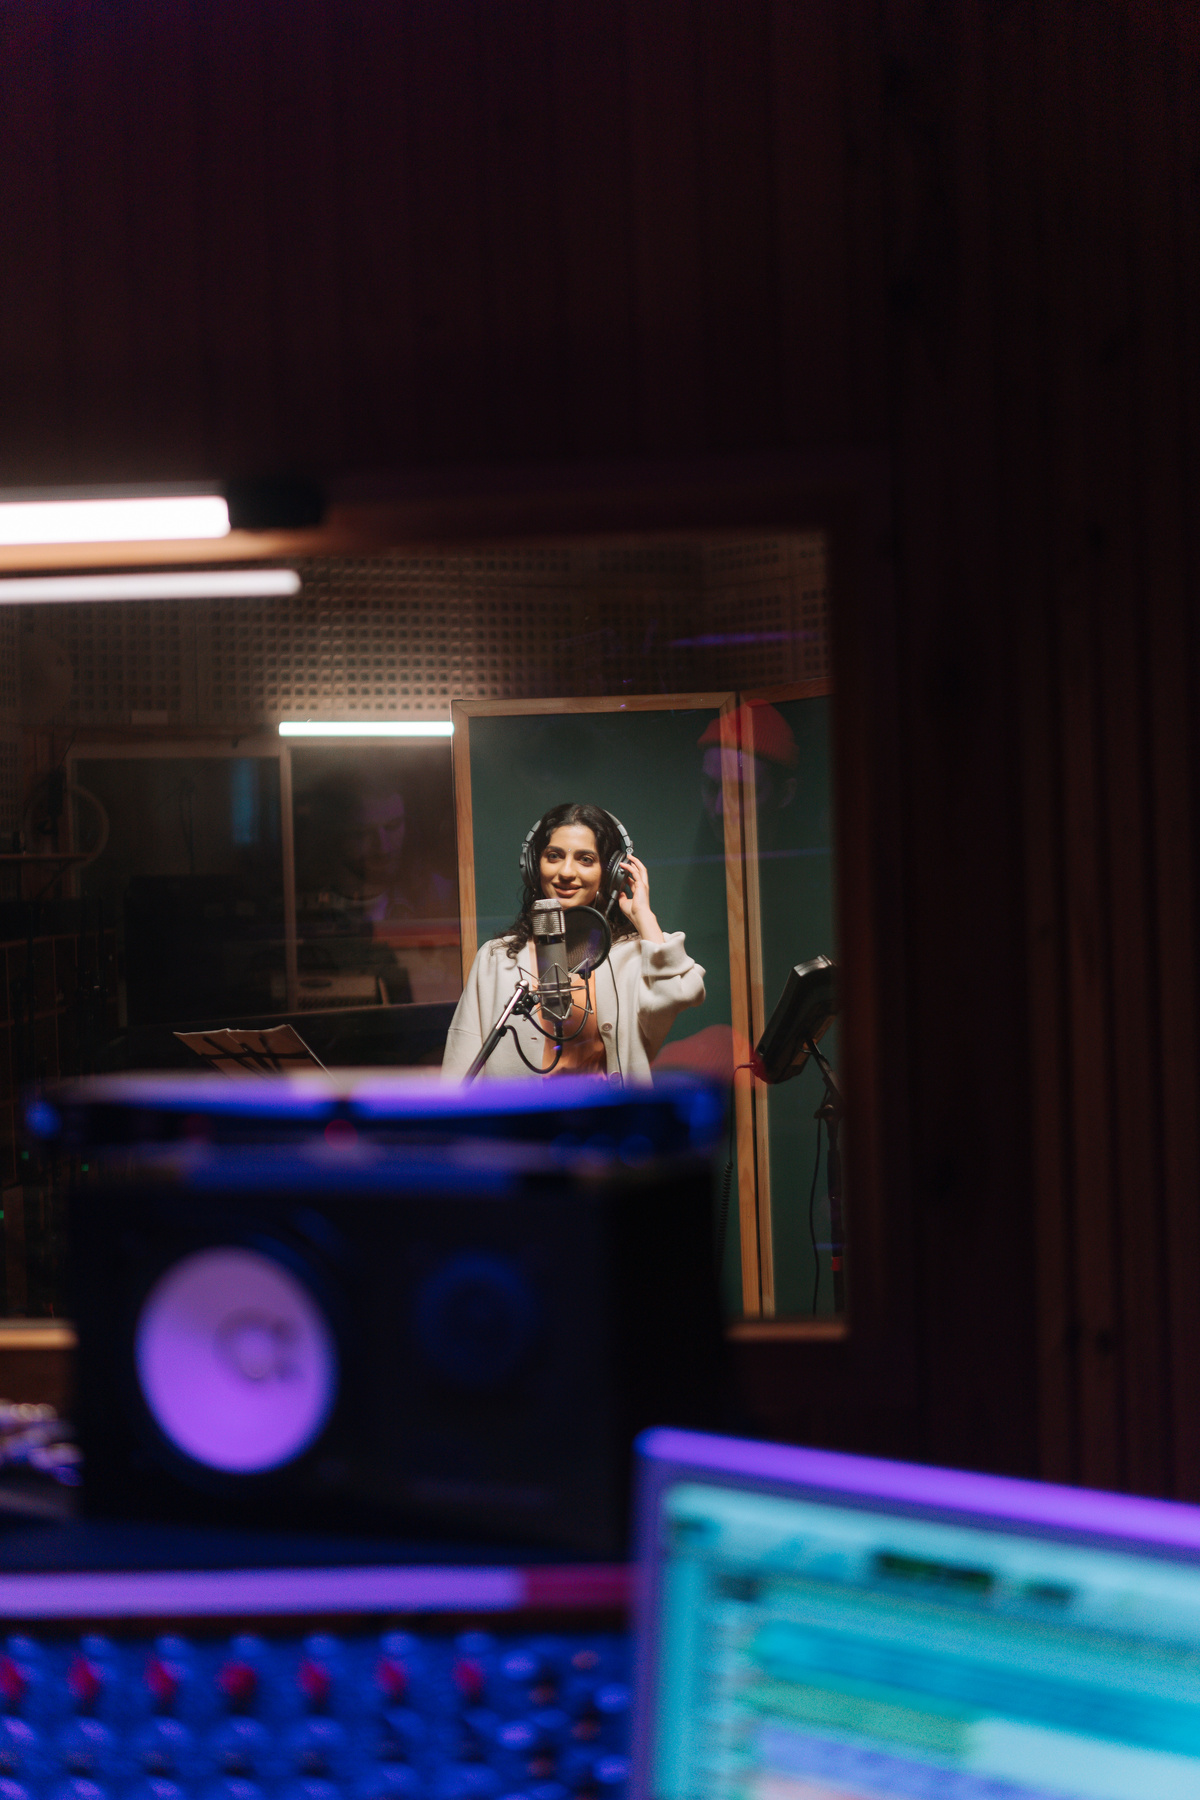 A Woman Wearing Headphones Inside the Music Studio